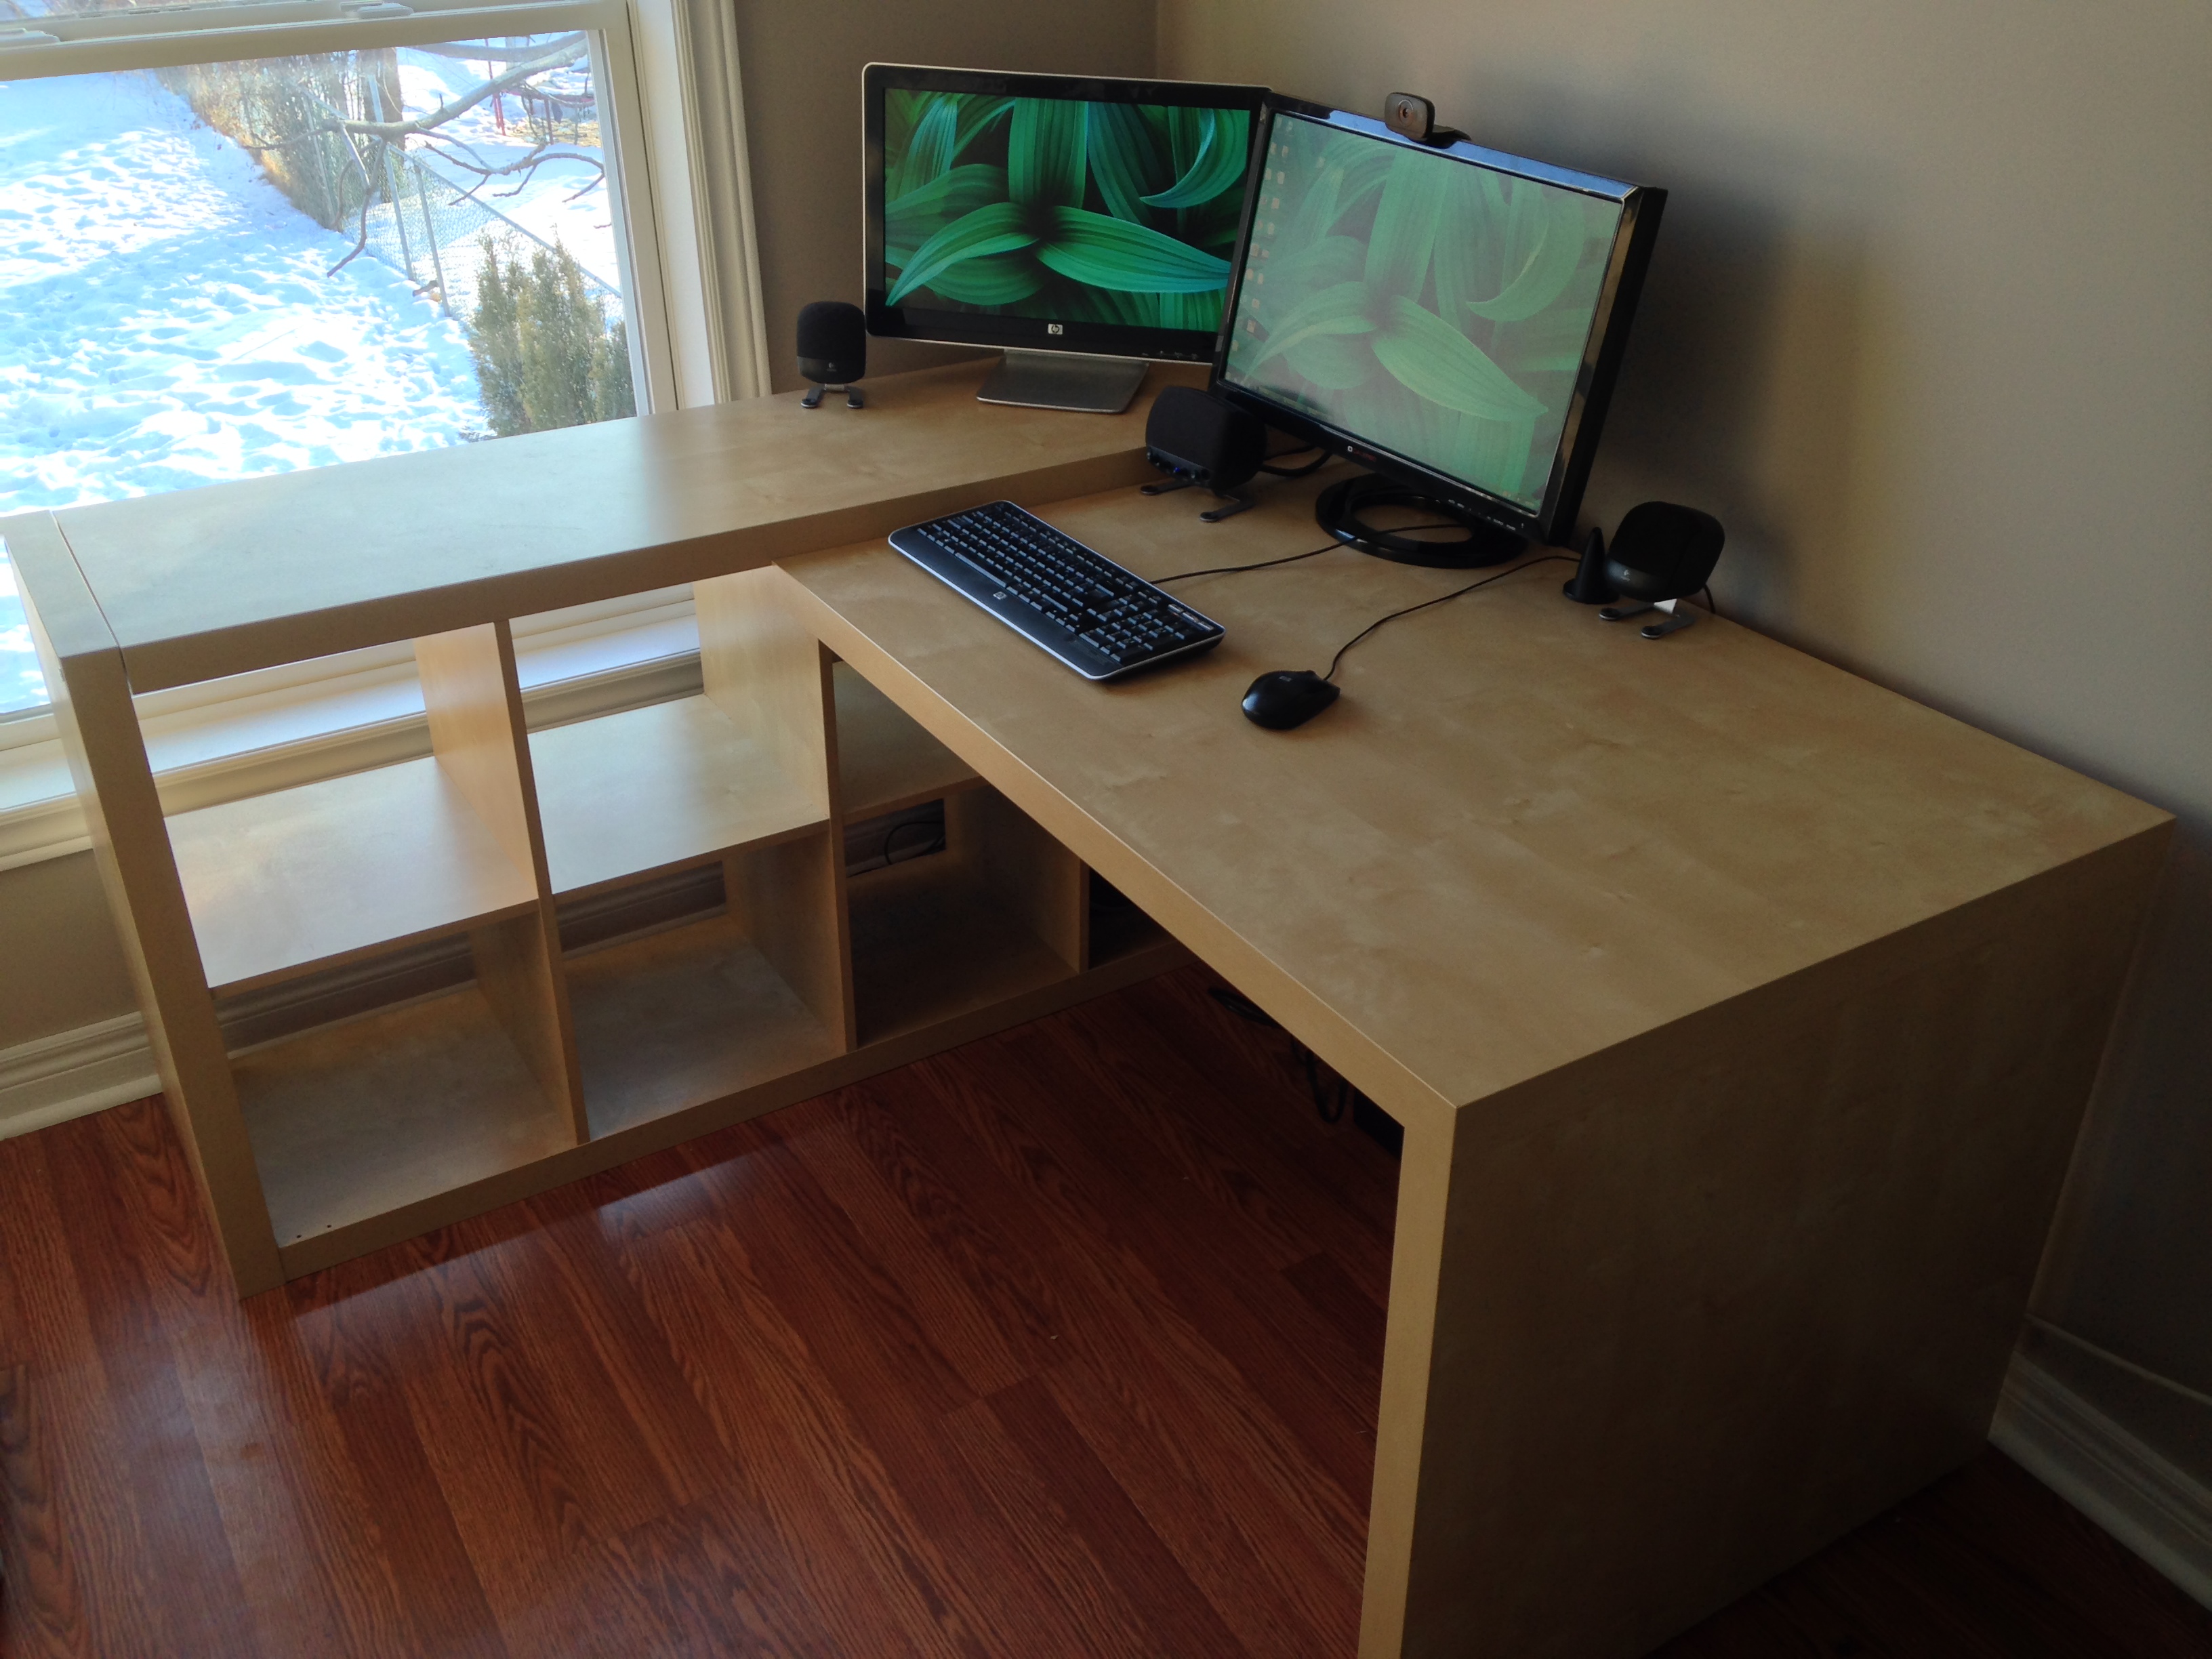 IKEA Build Your Own Desk